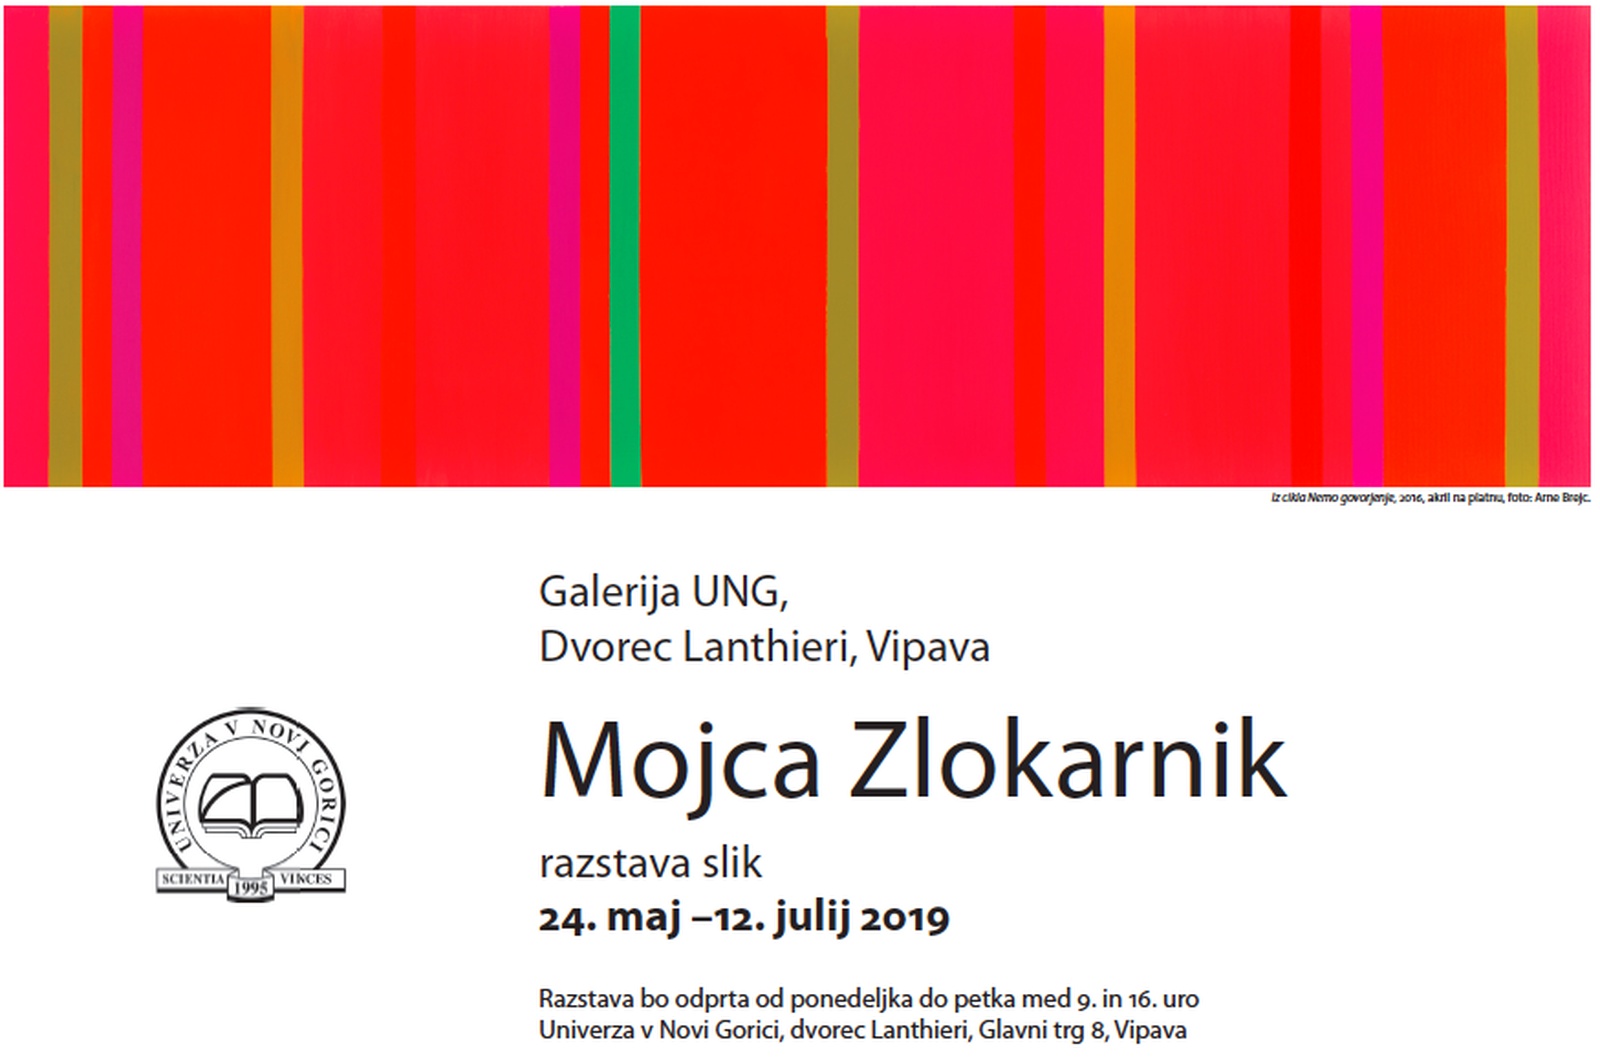 Invitation to the new University of Nova Gorica’s Gallery  opening